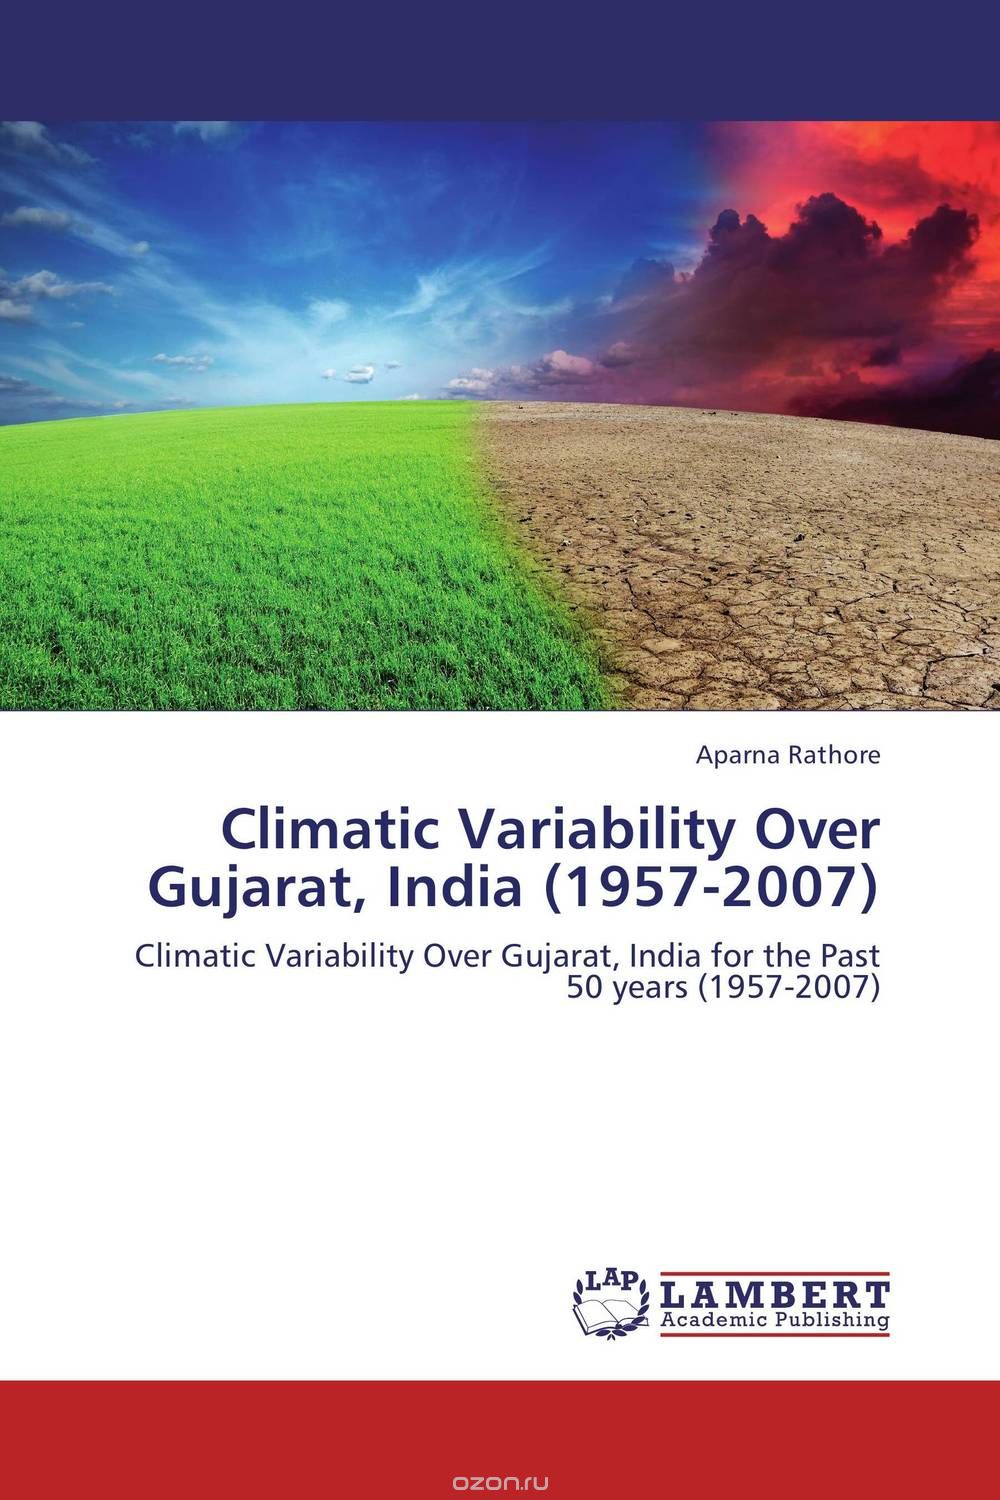 Скачать книгу "Climatic Variability Over Gujarat, India (1957-2007)"